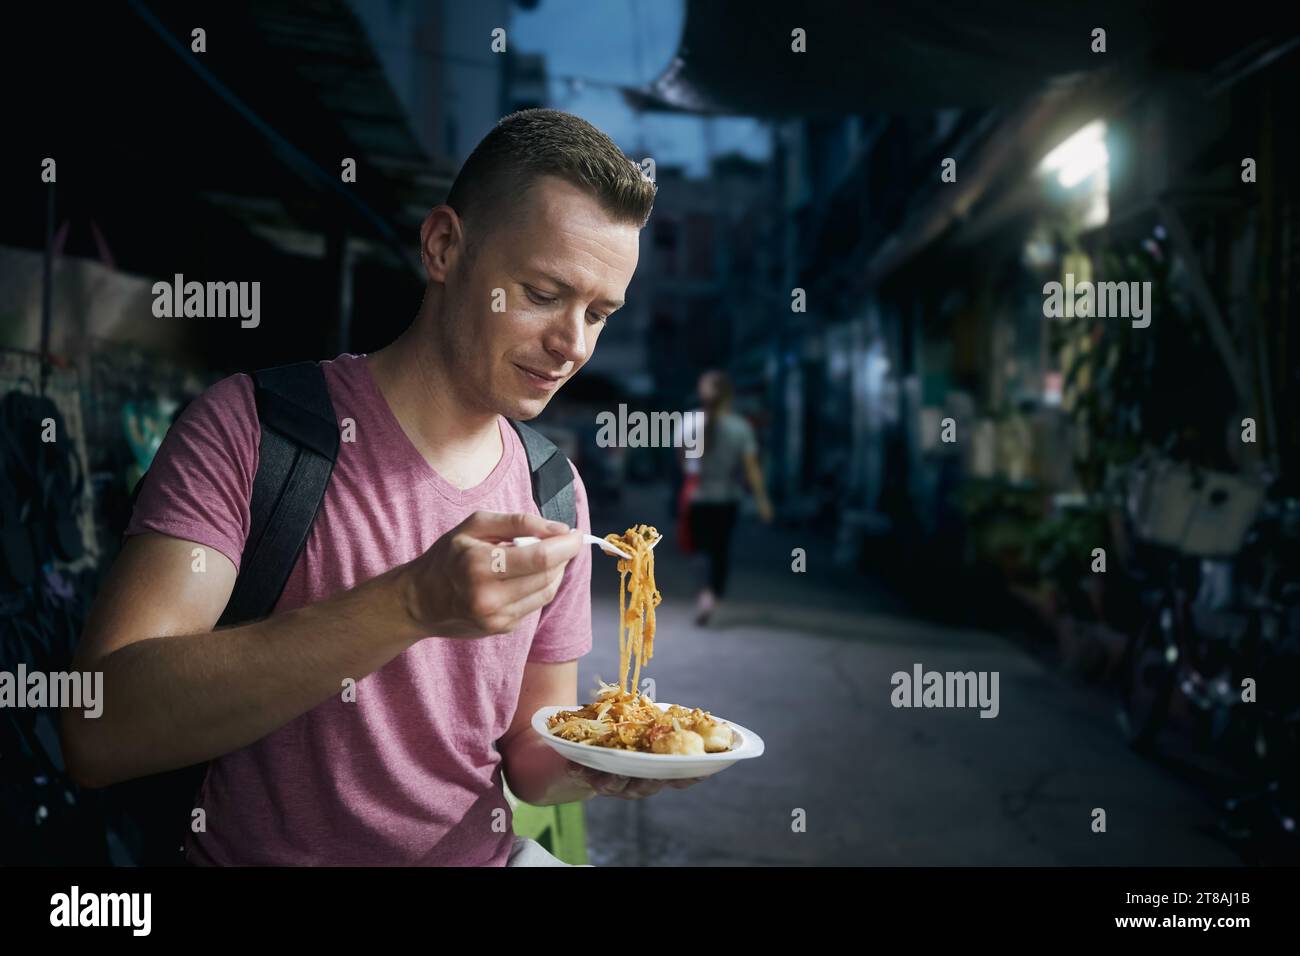 Tourist at night Bangkok. Man with backpack eating local food (pad thai) at street market. Stock Photo